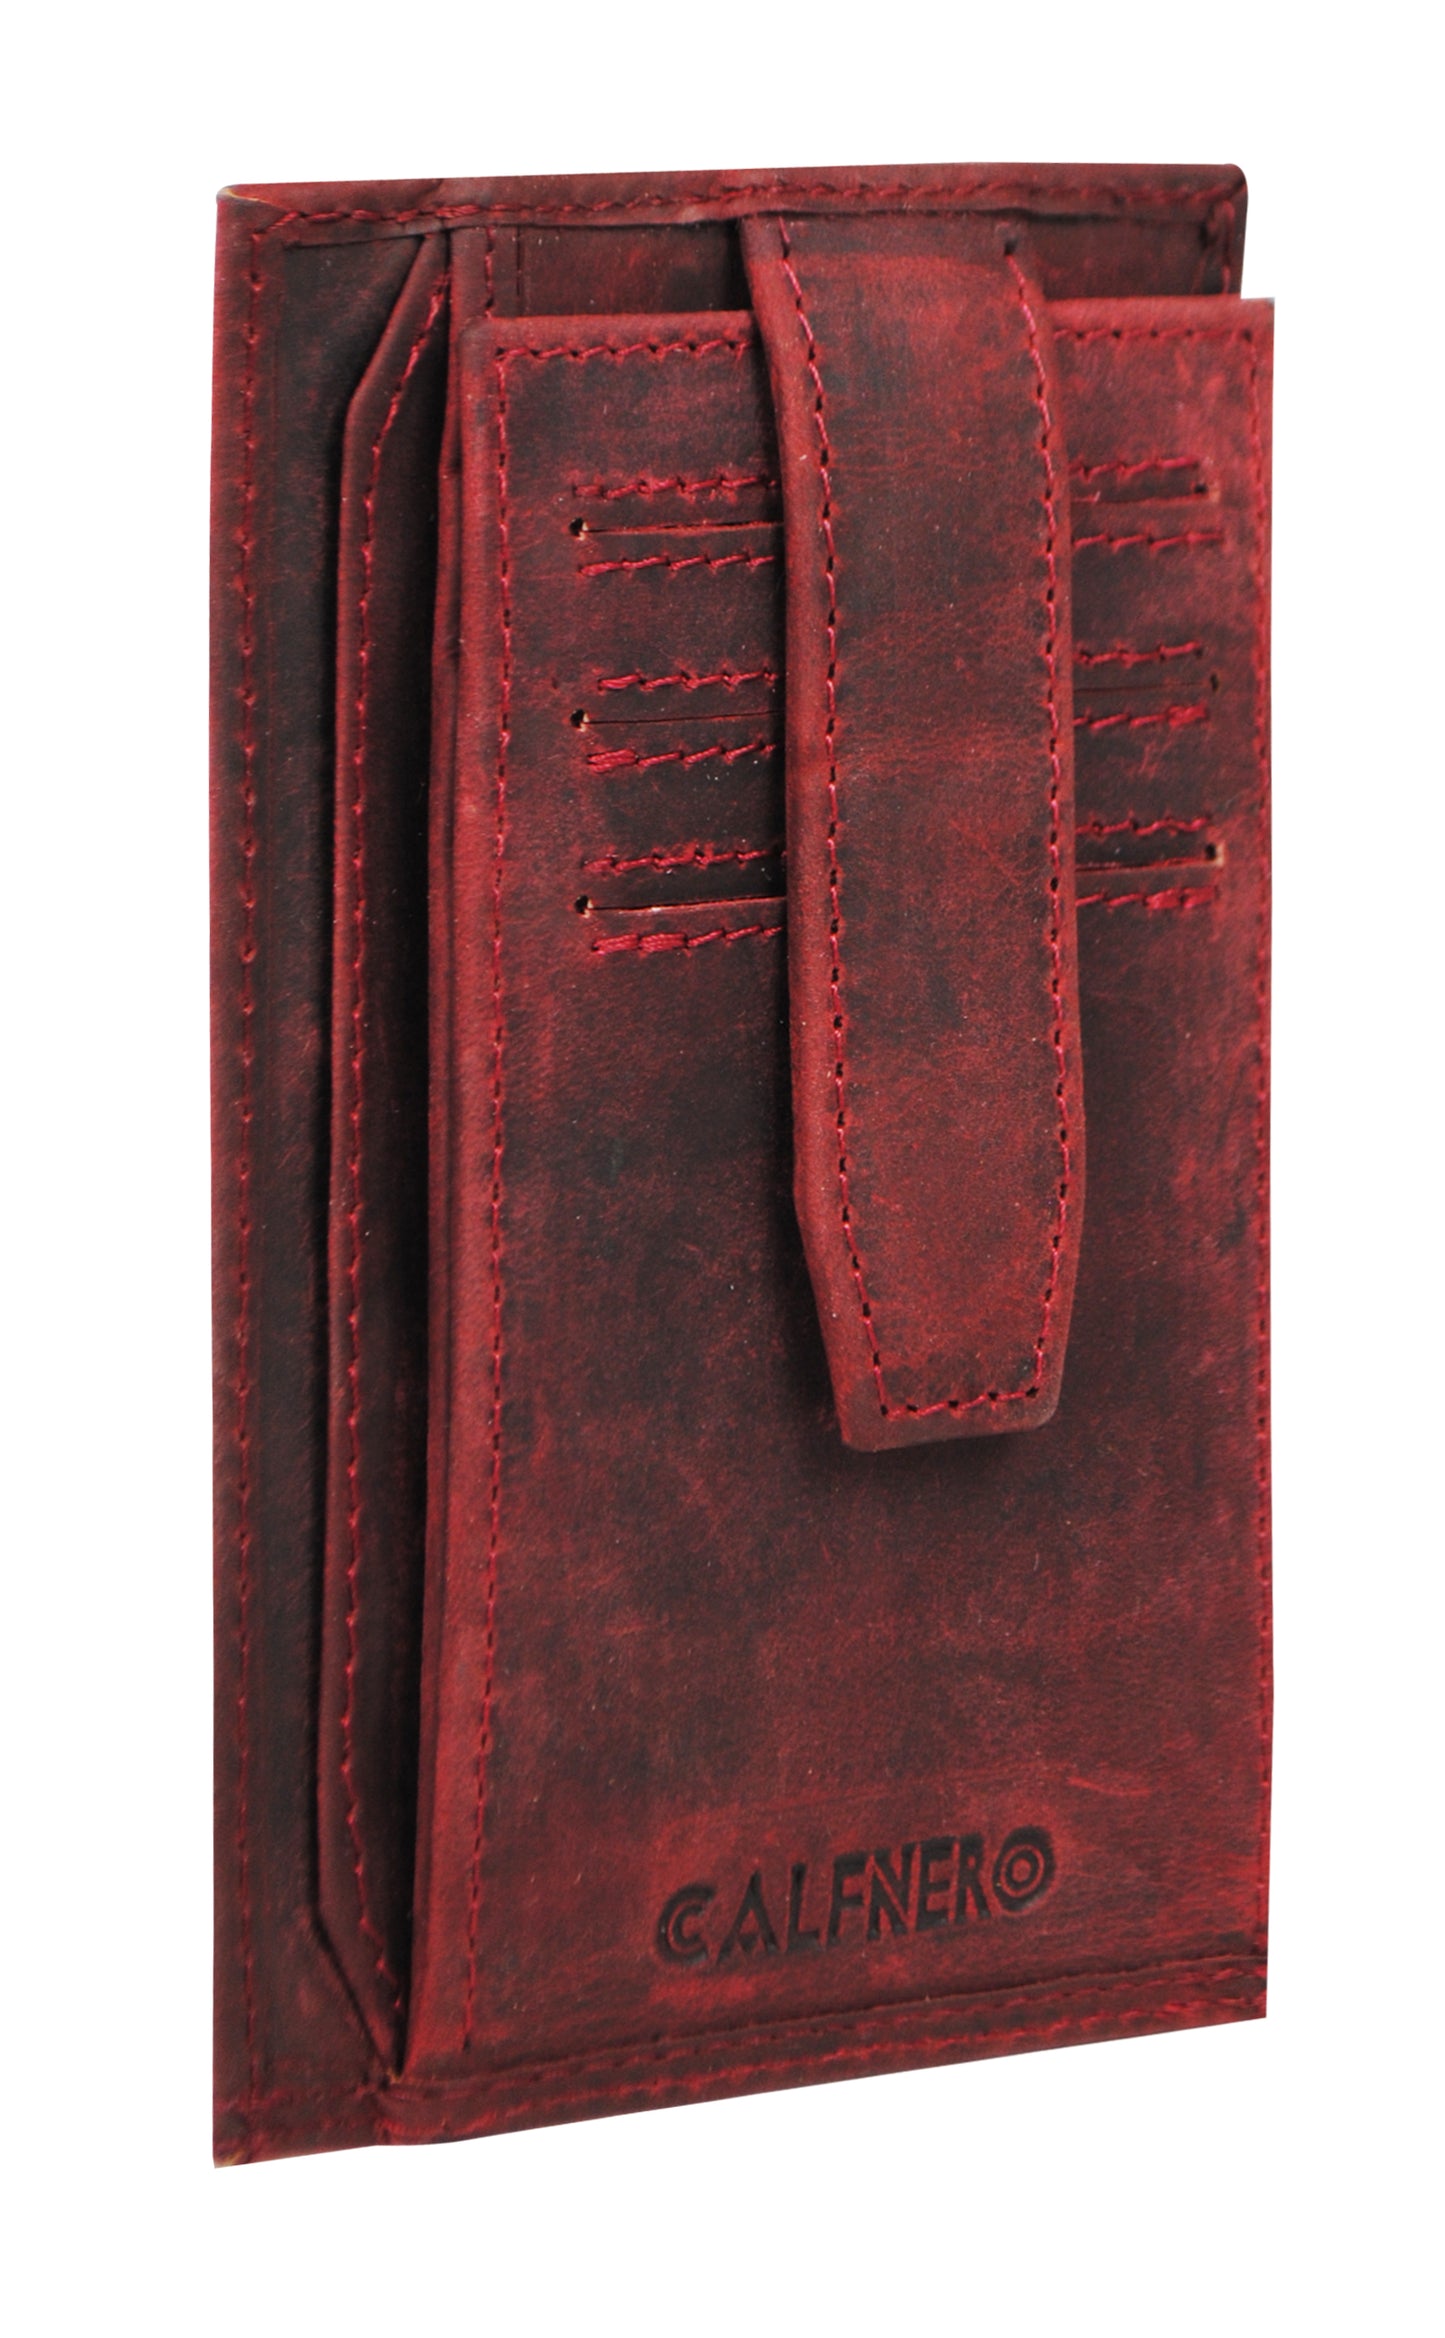 Calfnero Genuine Leather Card Case (D-26-Red)